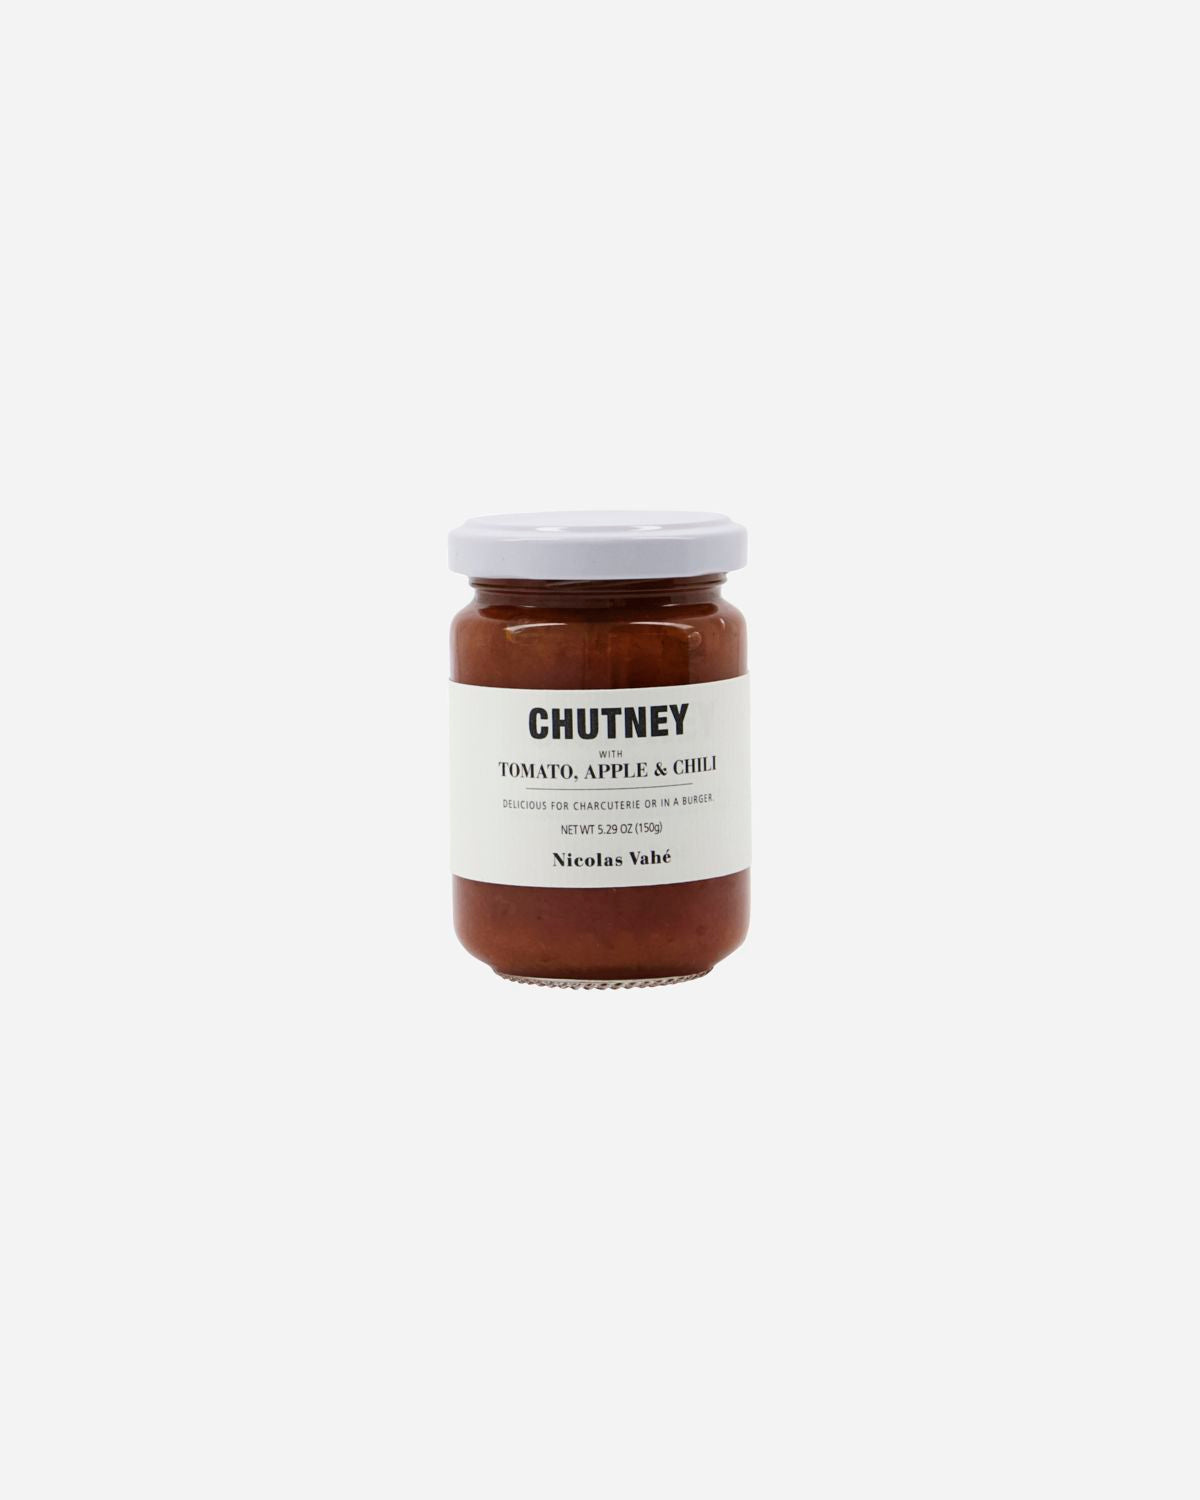 Chutney, Tomato, Apple & Chili by Nicolas Vahe